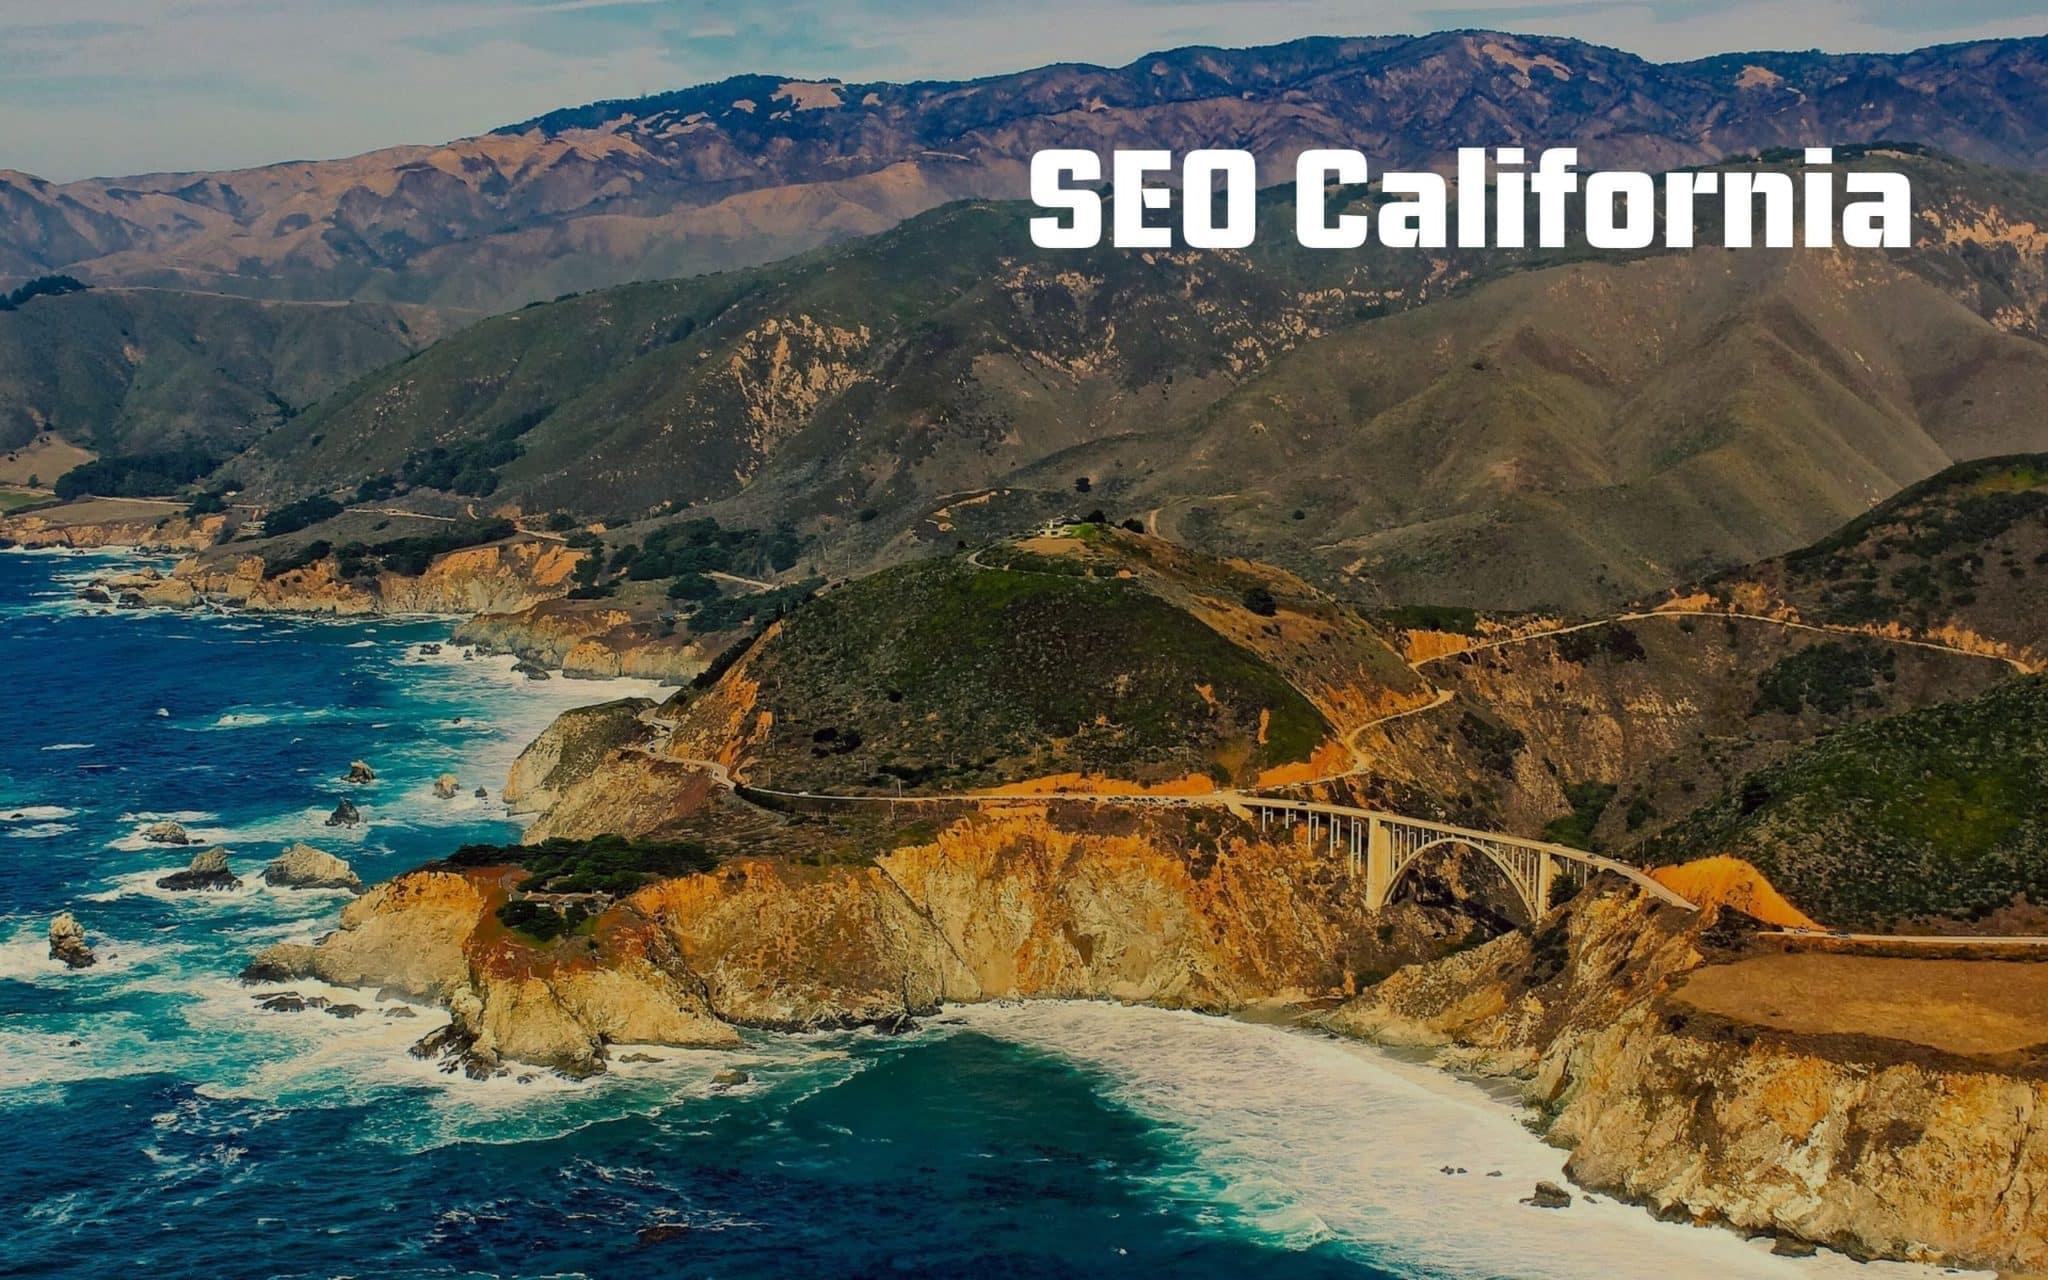 SEO Services Company in California -- Marketing firm 2021